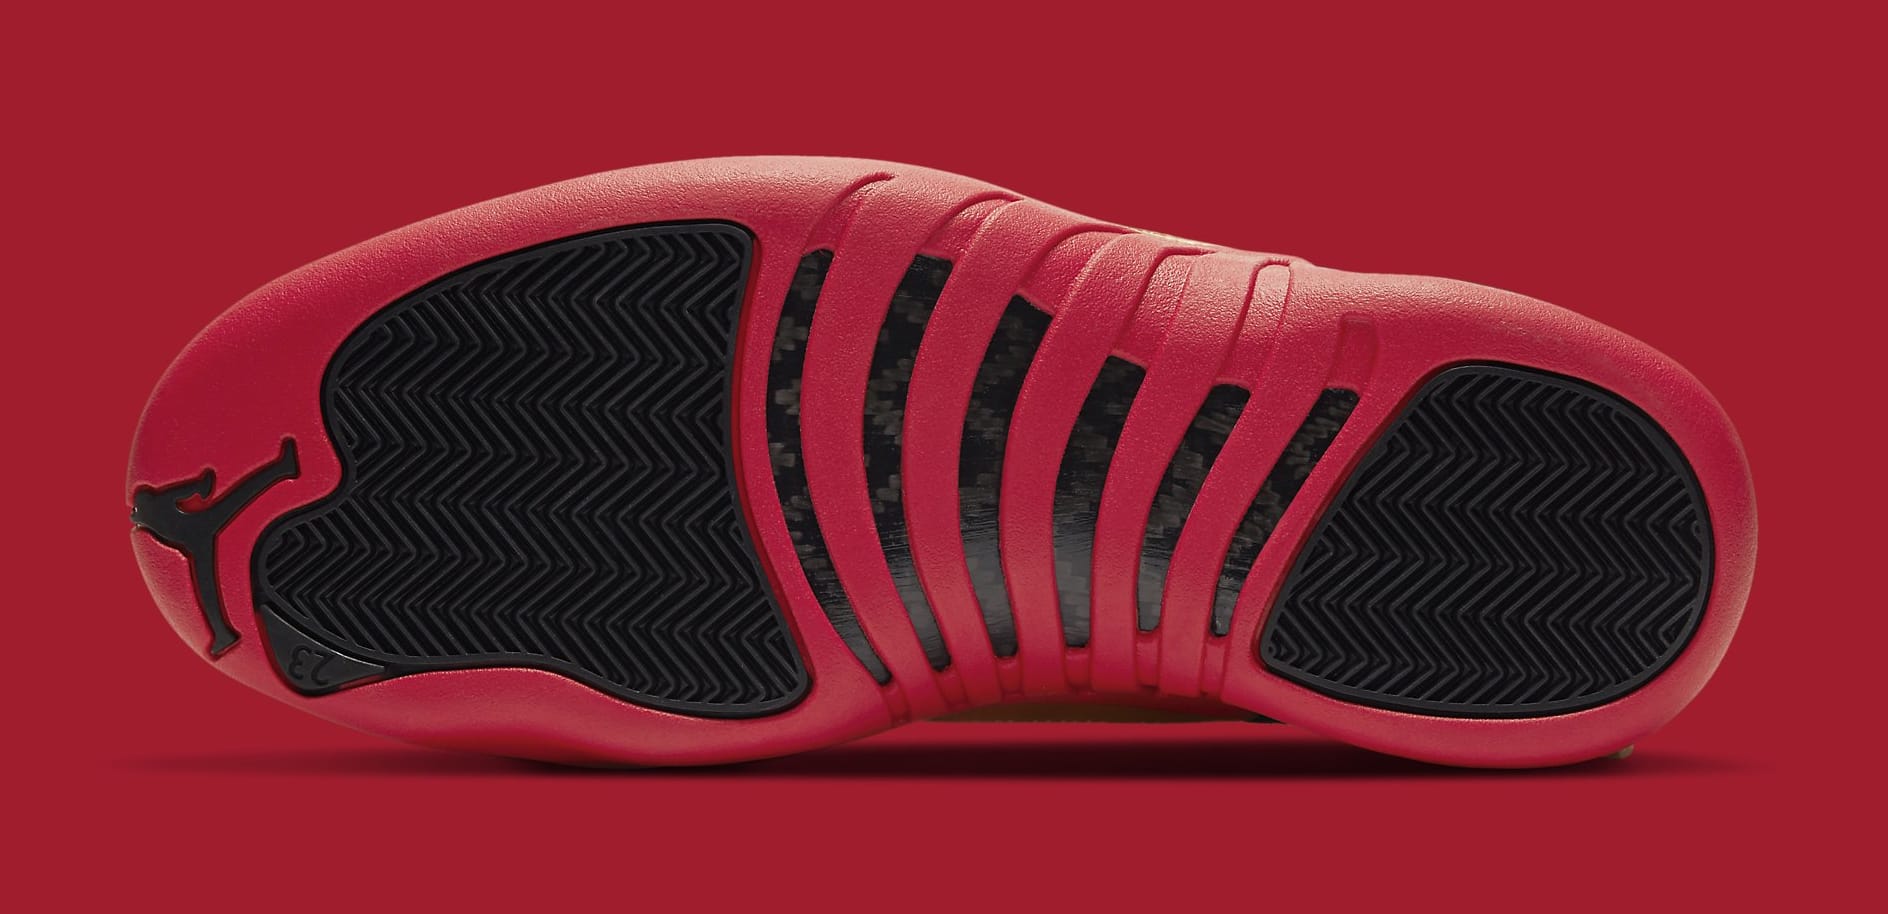 Nike Air Jordan 12 Retro Low SE Super Bowl-Black/Gold/Red Men US Size 9.5  2021